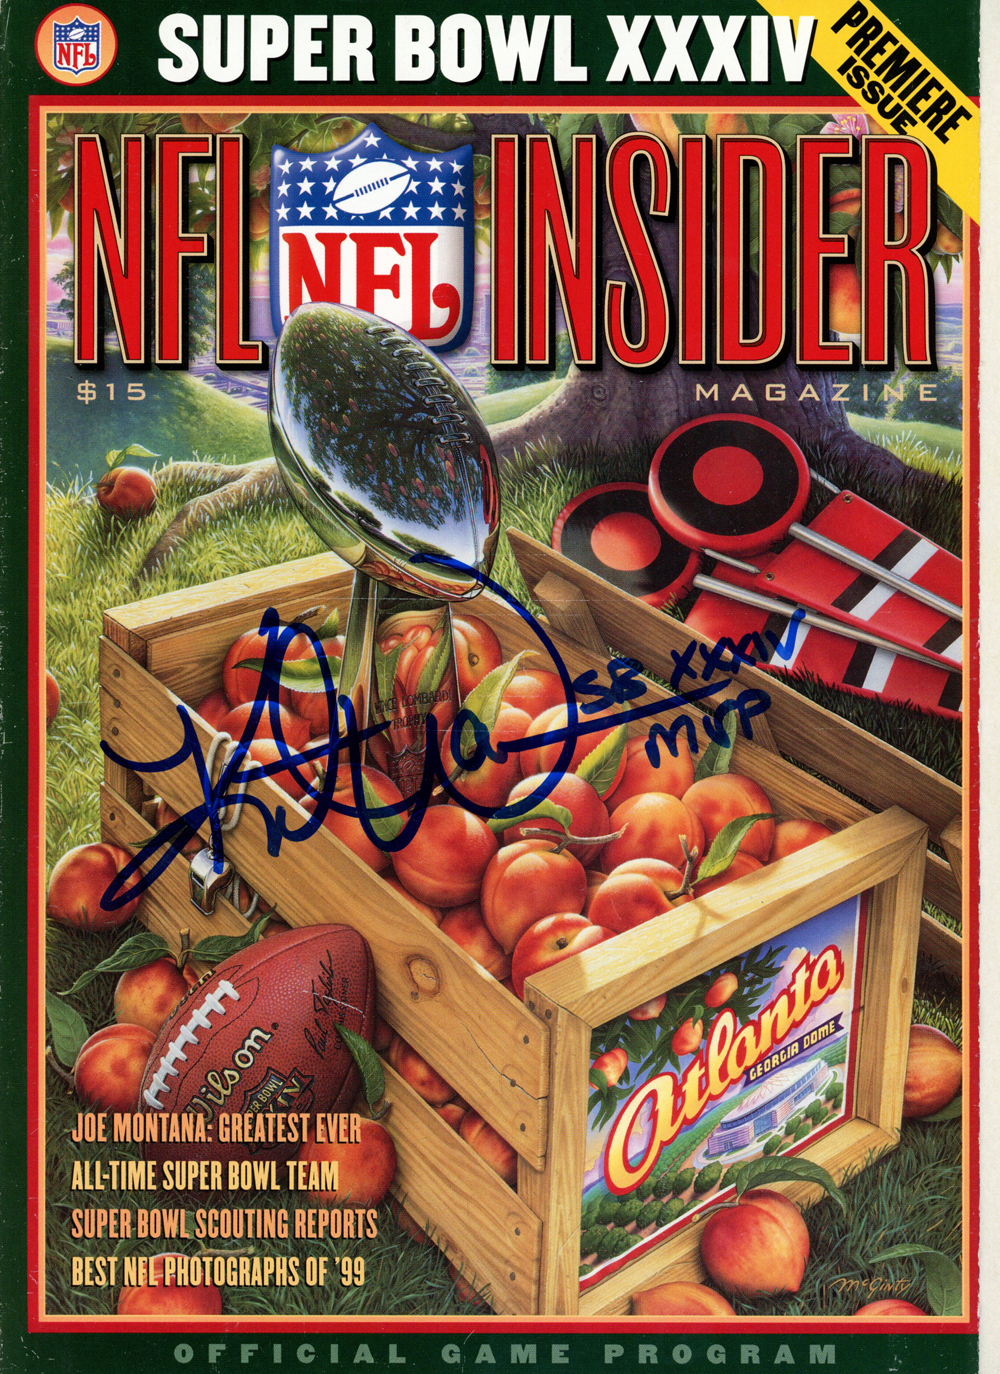 Kurt Warner Autographed NFL Insider Magazine March 2000 Beckett